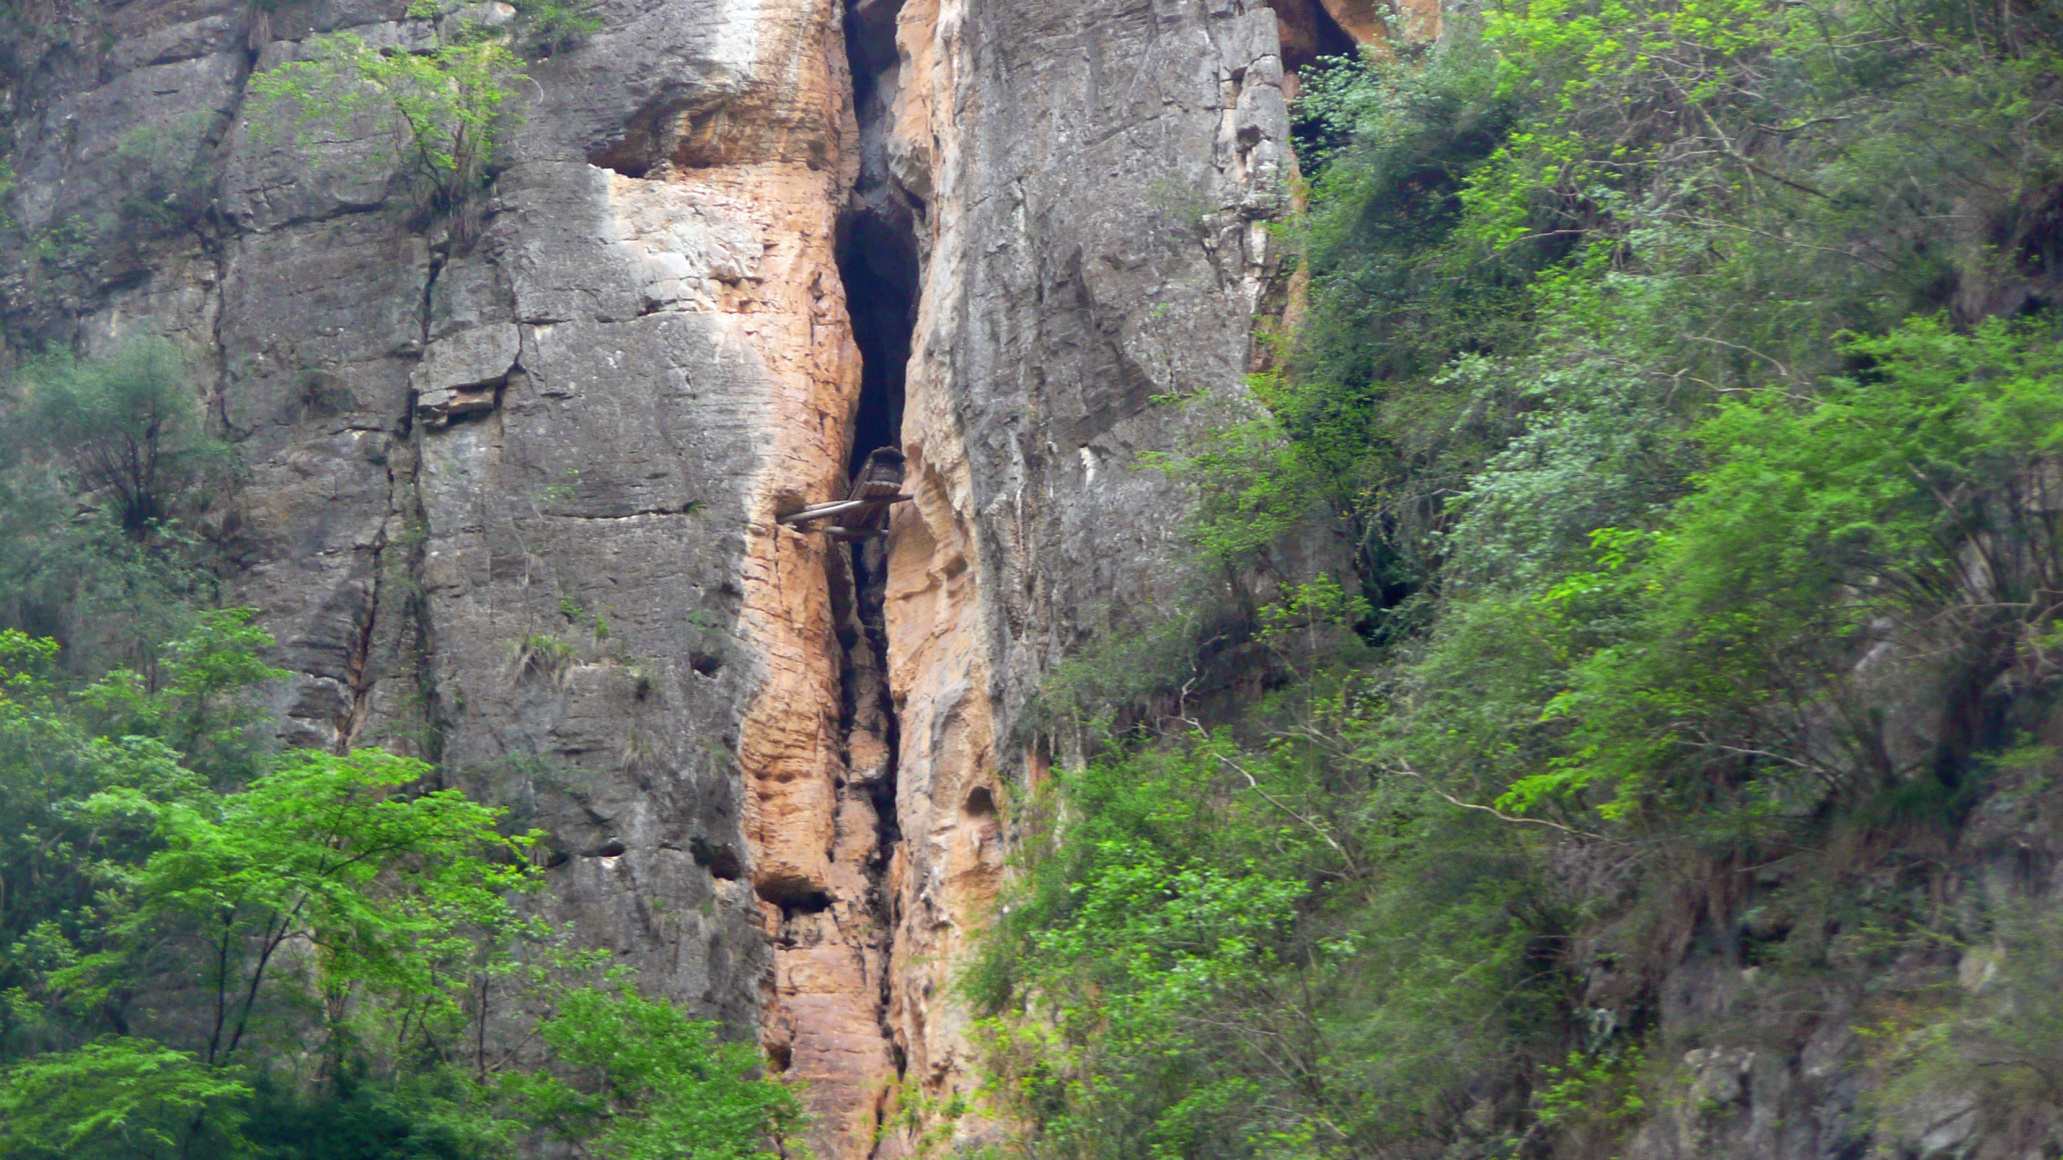 A coffin hangs precariously on a cliff face at the Shen Nong Stream, Hubei, China